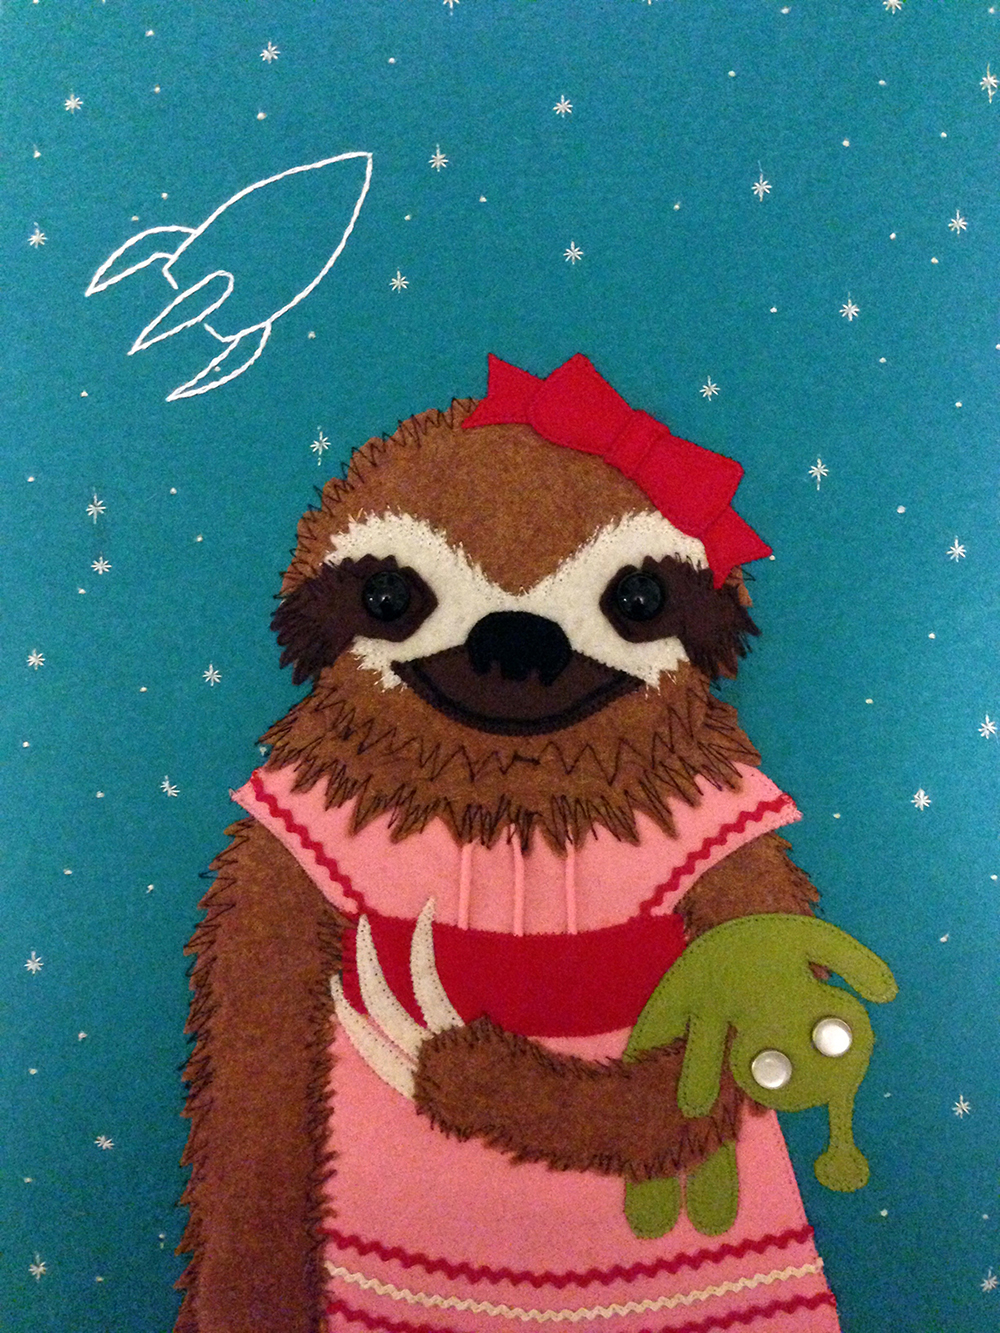 felt portrait of a sloth with an alien doll